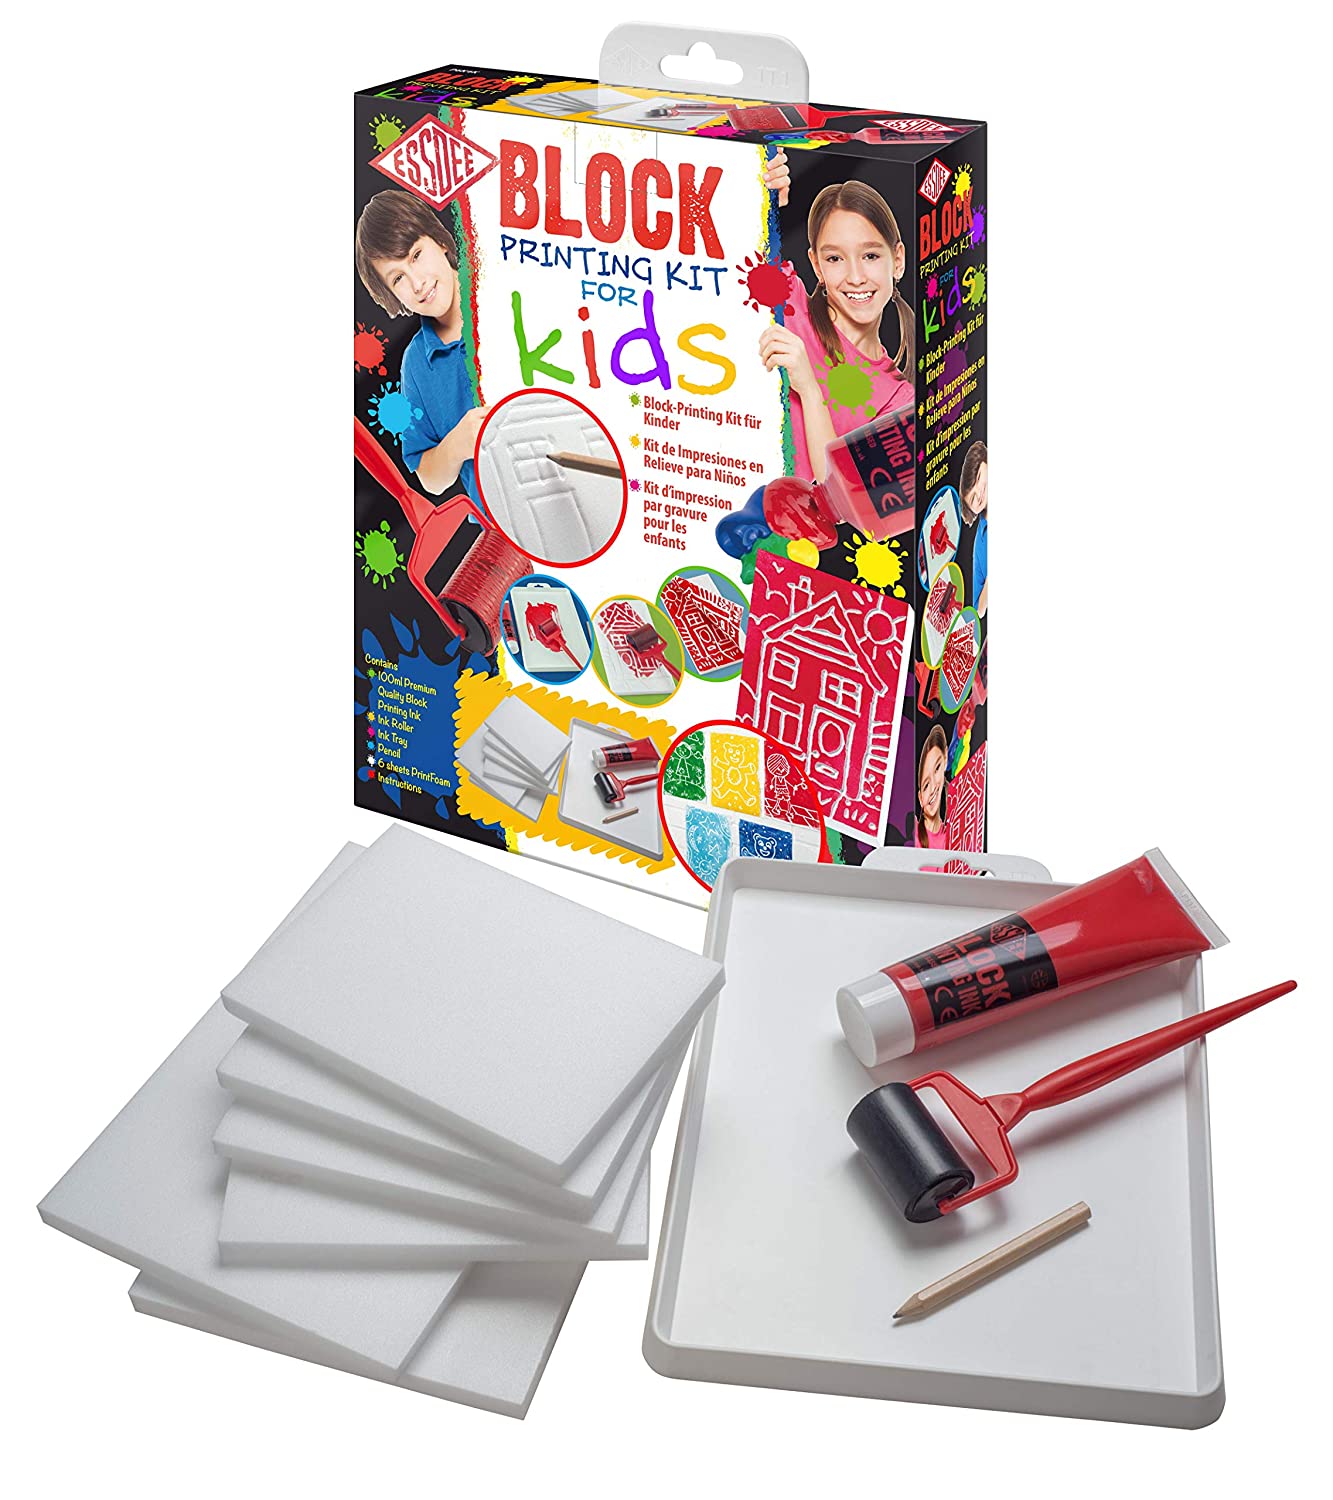 Essdee Block Printing Kit For Kids contents